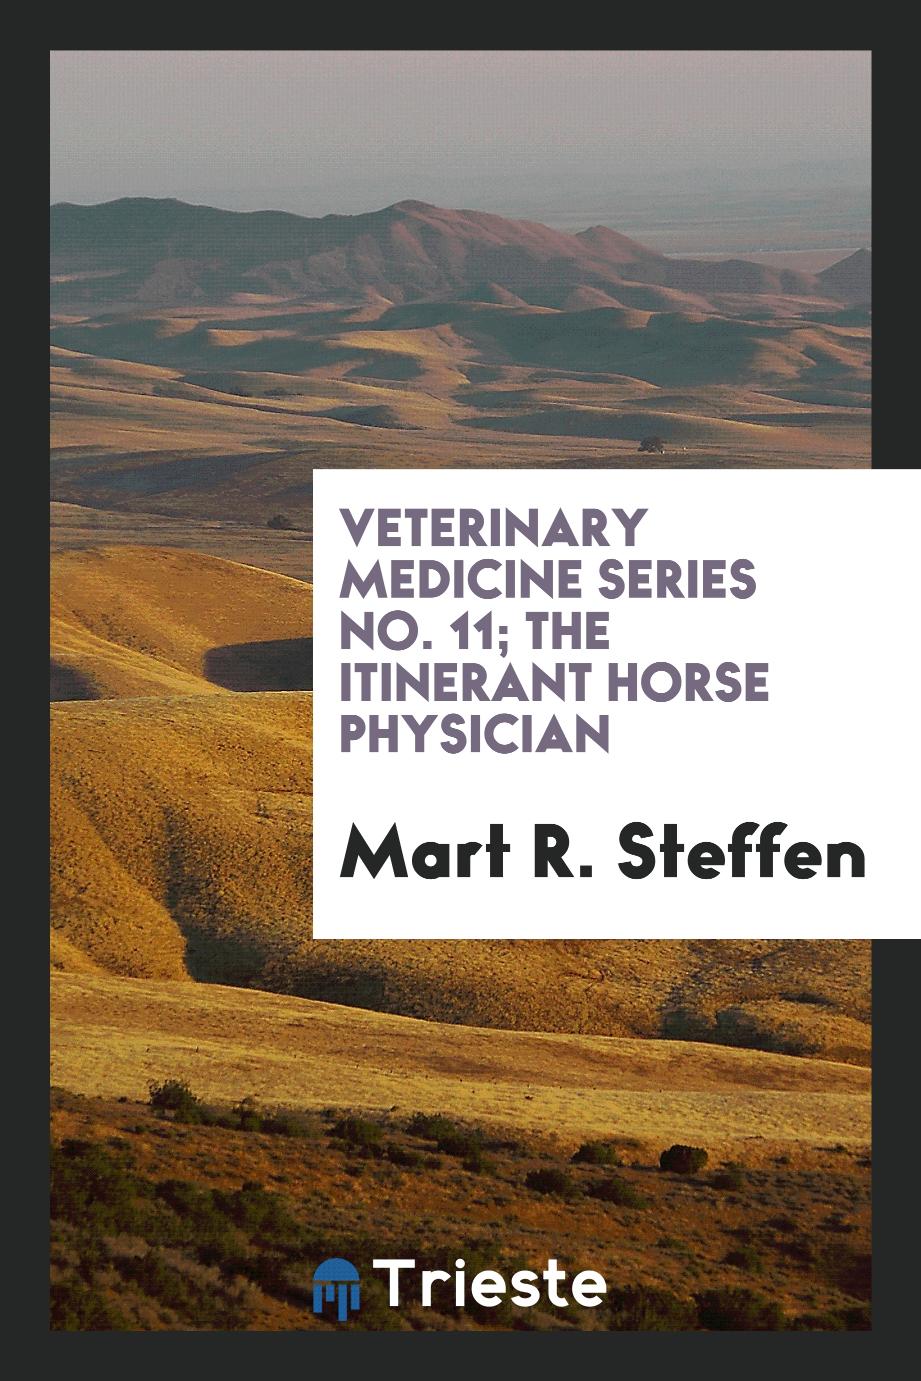 Veterinary medicine series No. 11; The itinerant horse physician